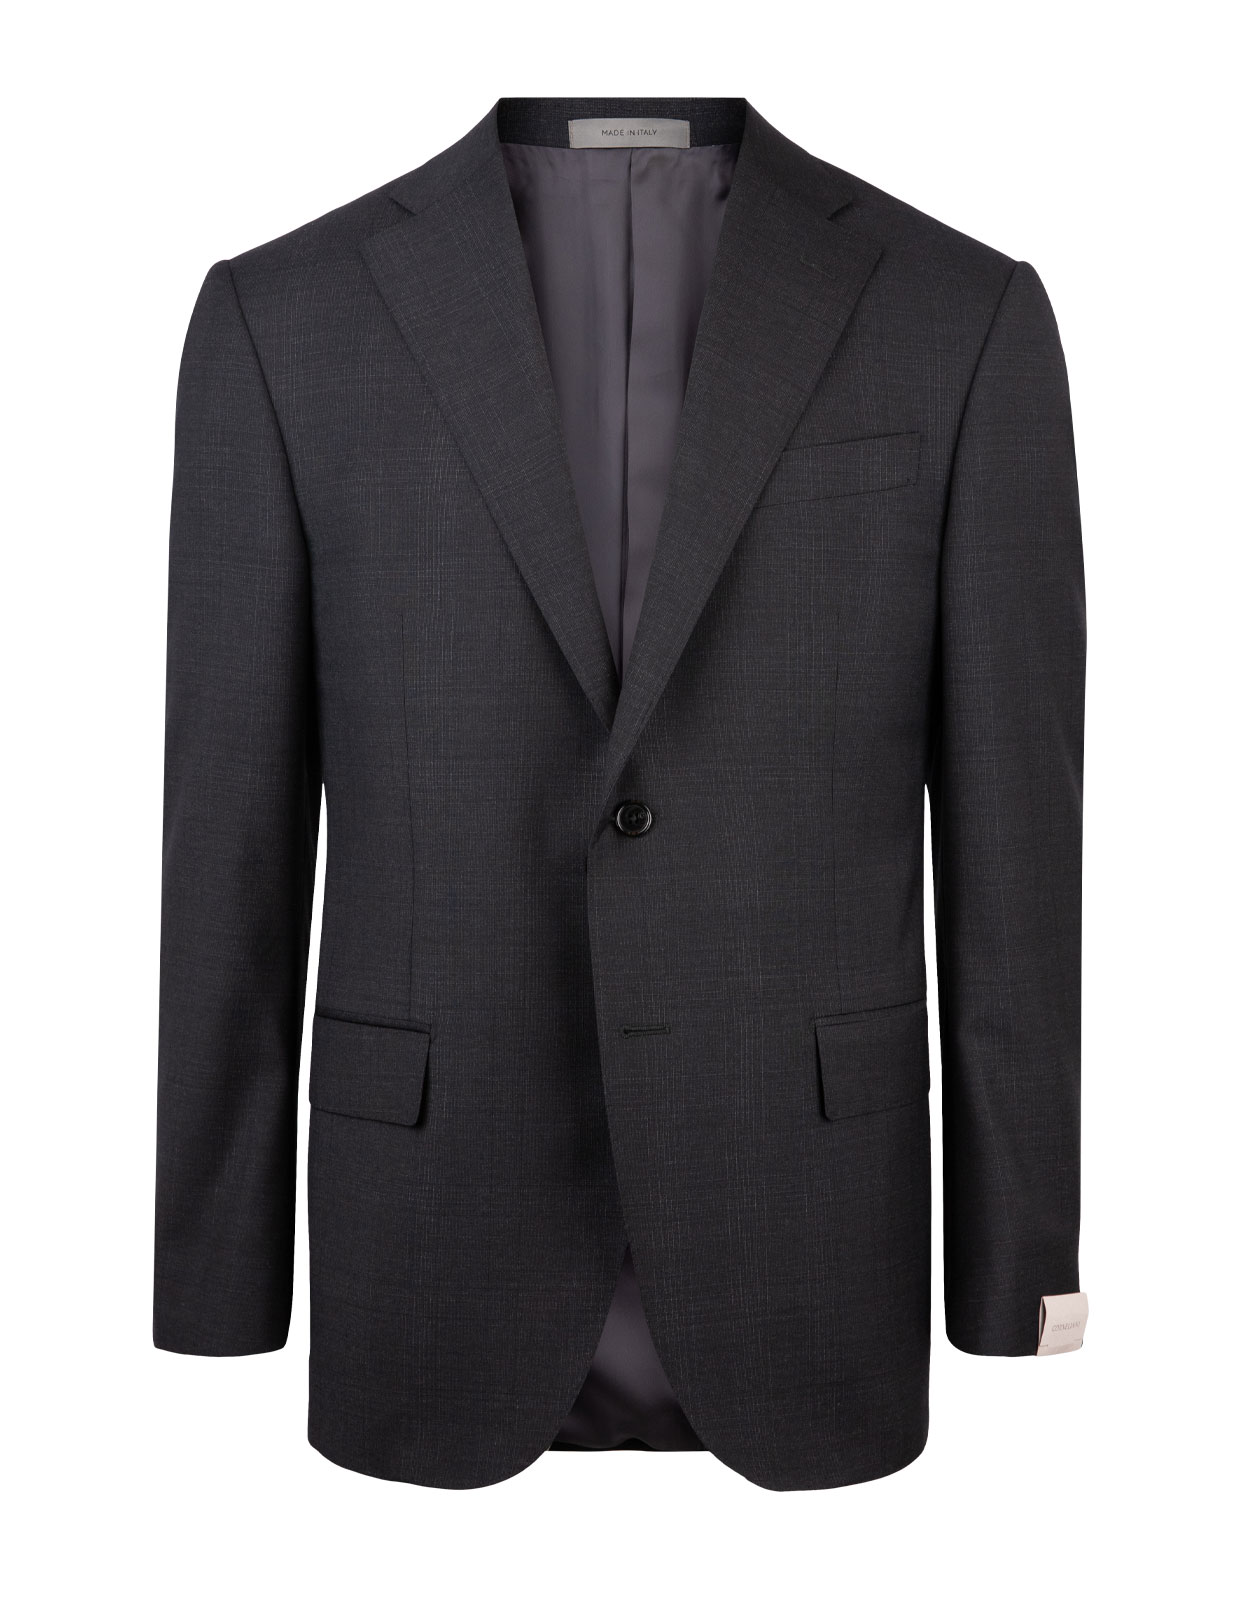 Leader Suit Wool Grey Check